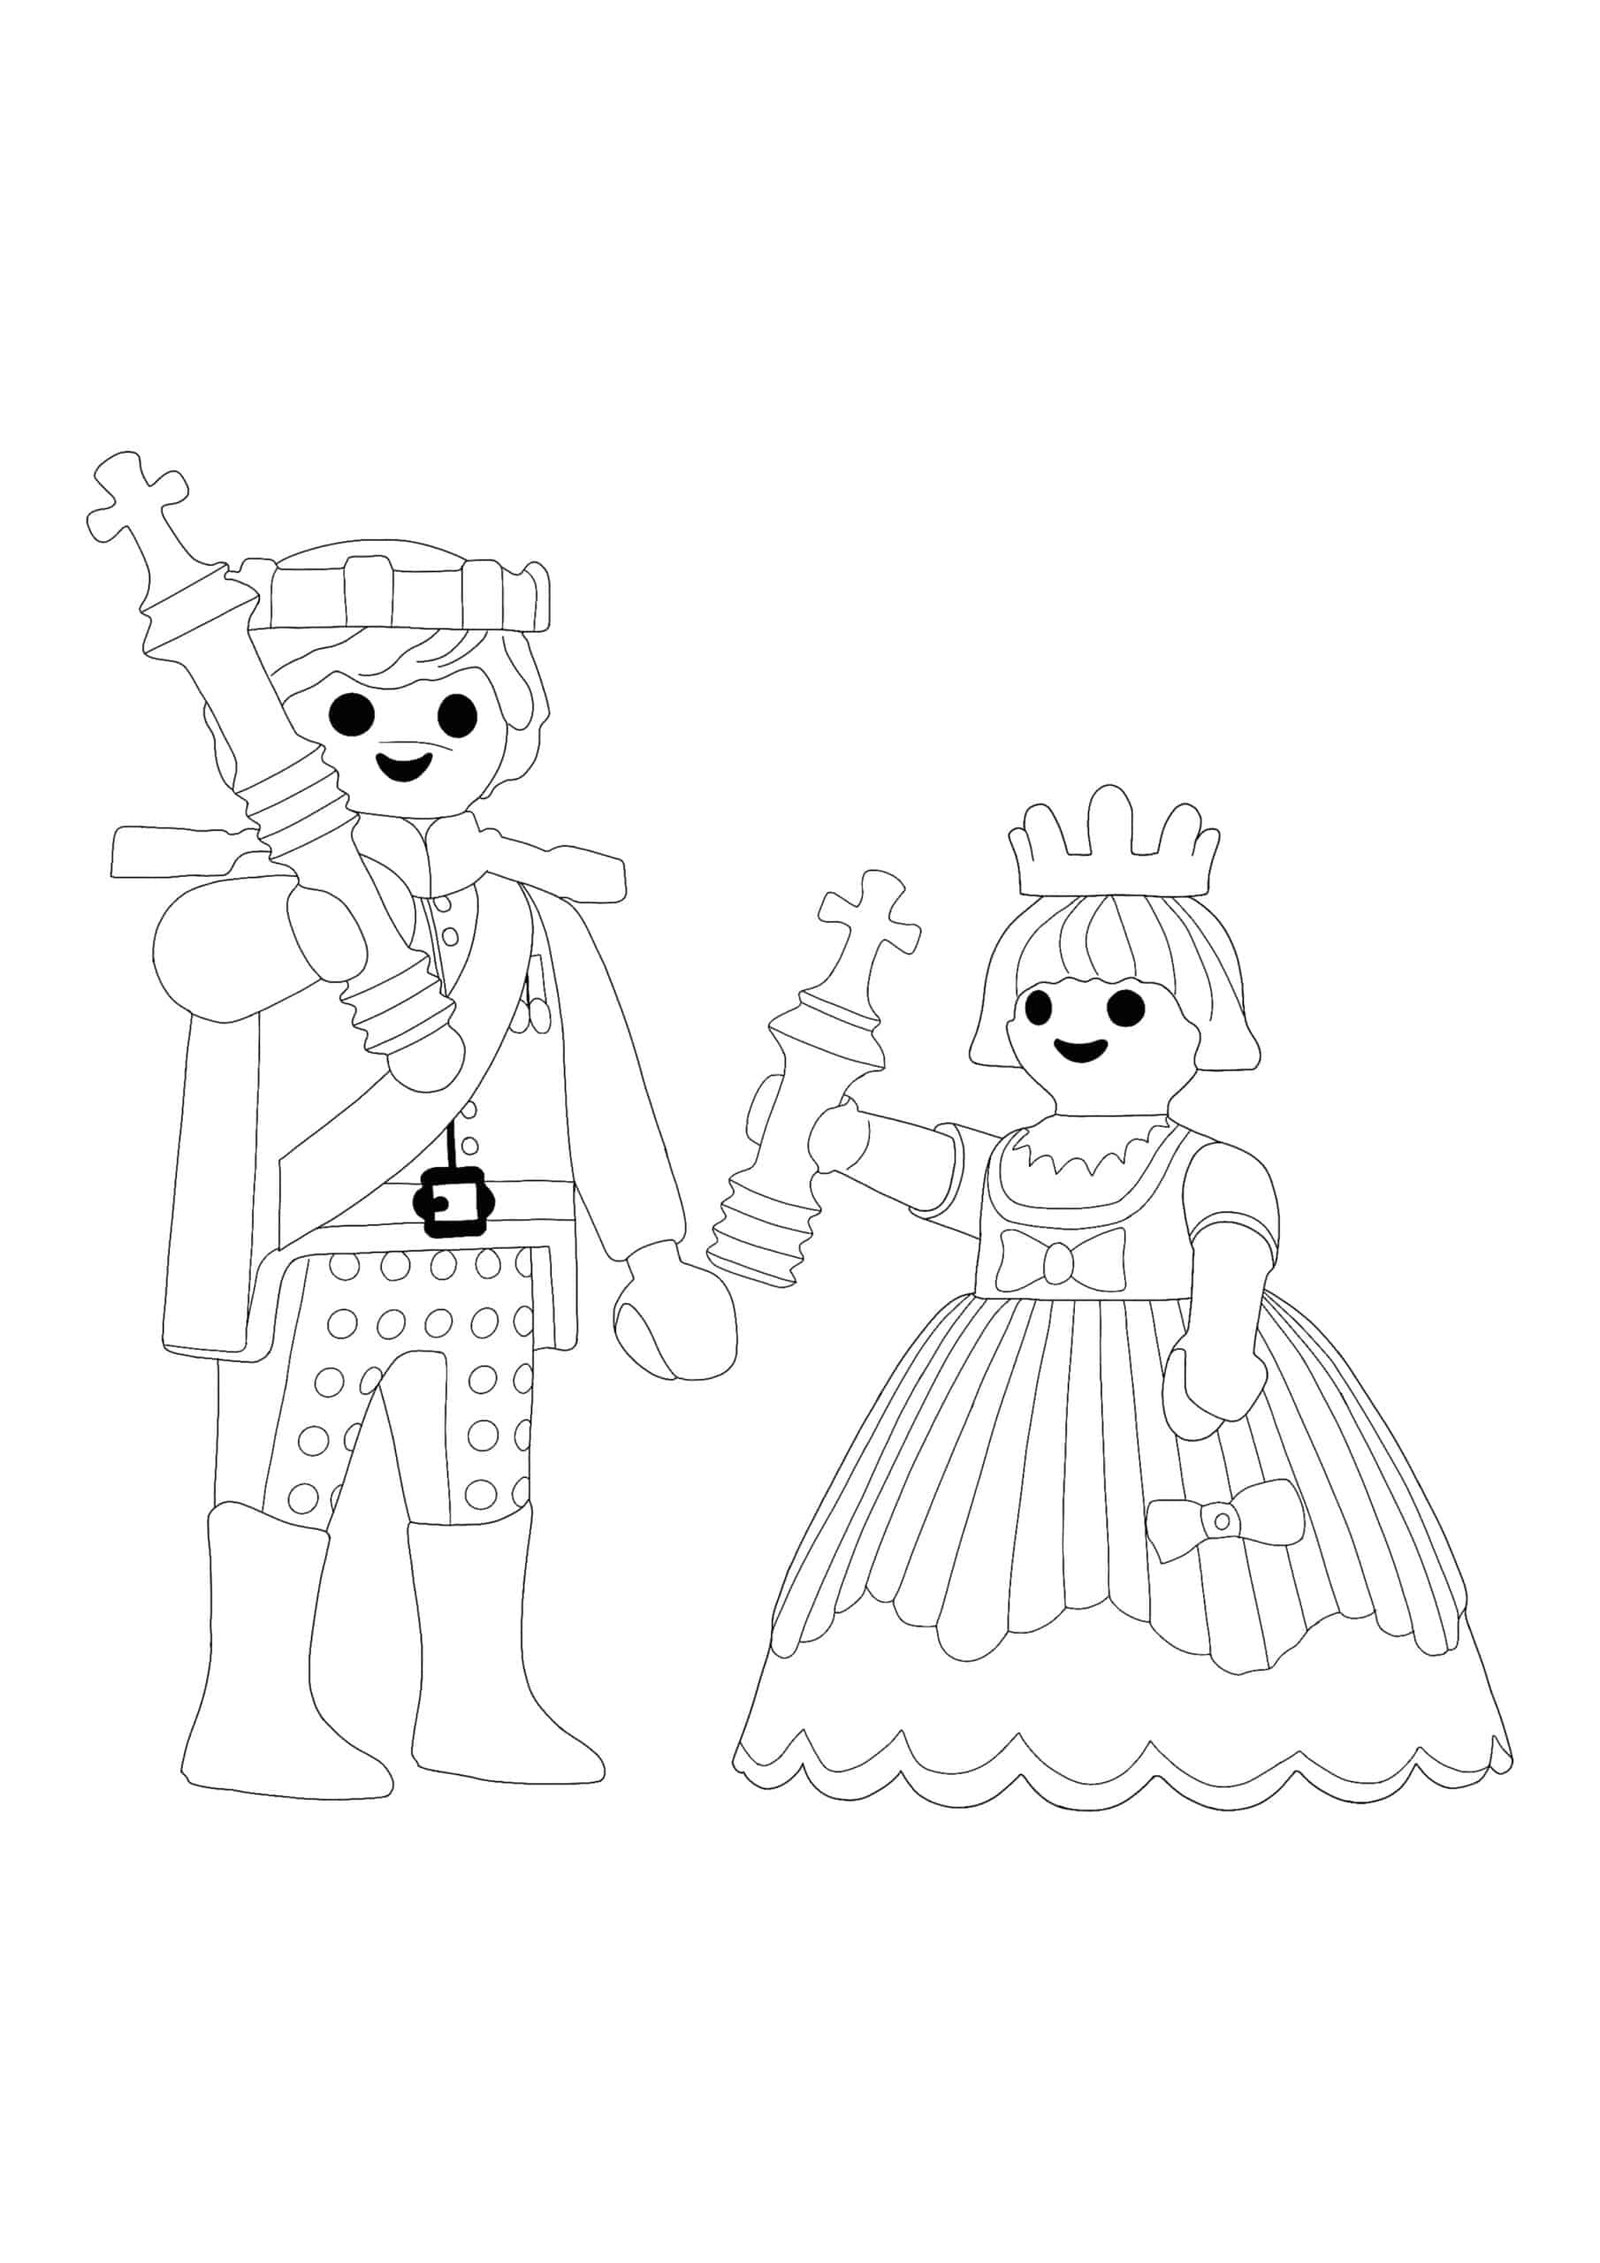 Playmobil Prince and Princess coloring page